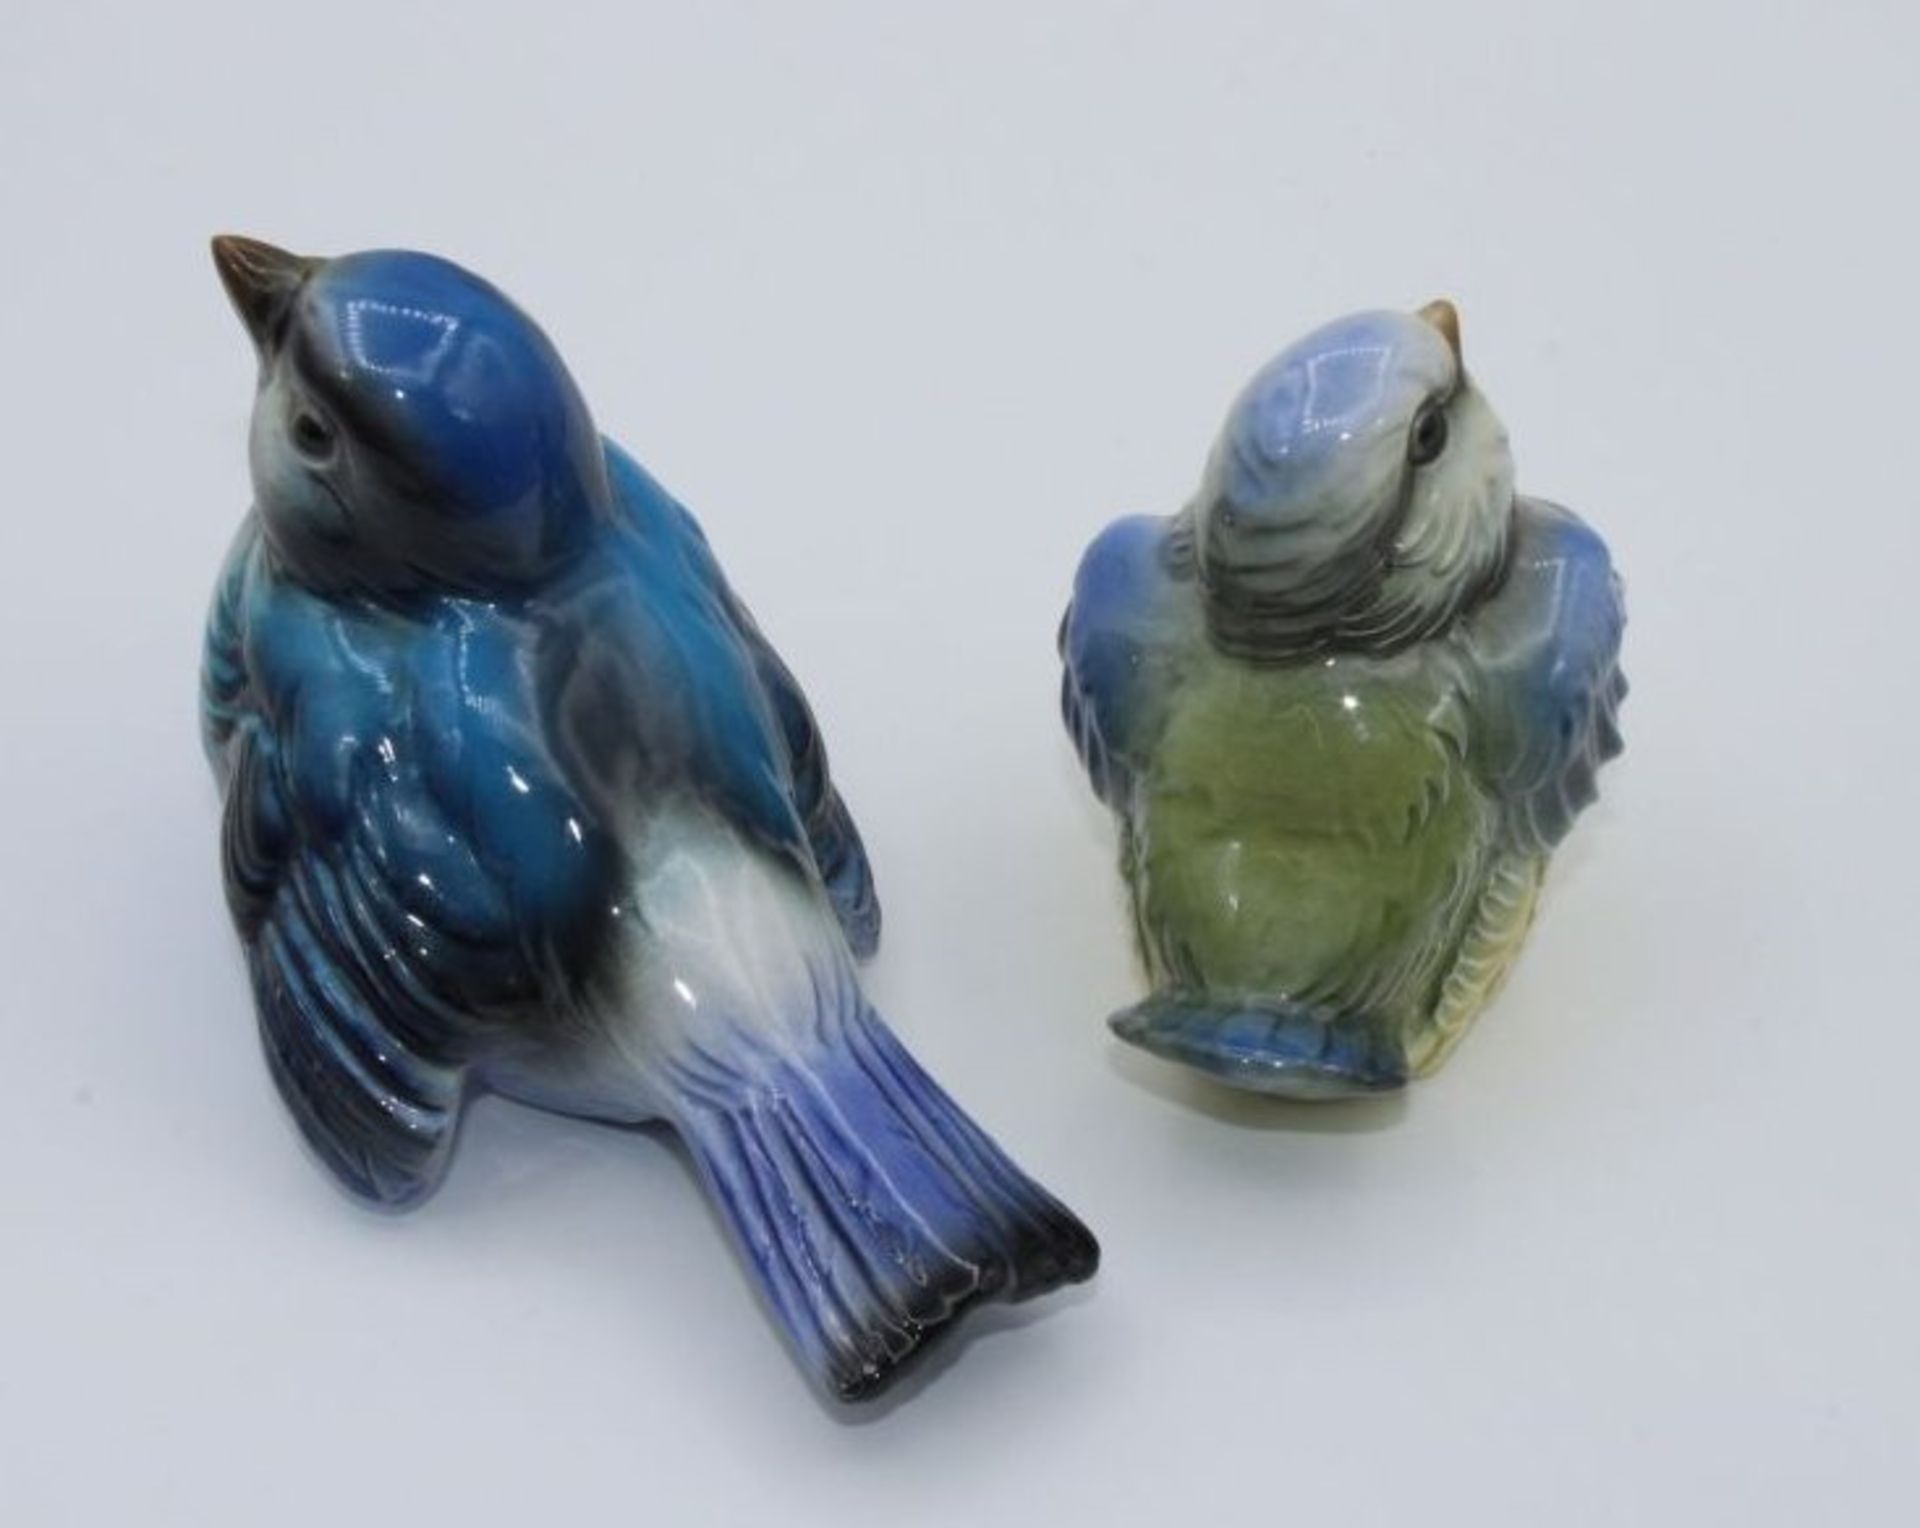 2x div. Vogelfiguren, Goebel, polychr. Bemalung in Unterglasurfarben, ca. H-7cm. - Bild 2 aus 2